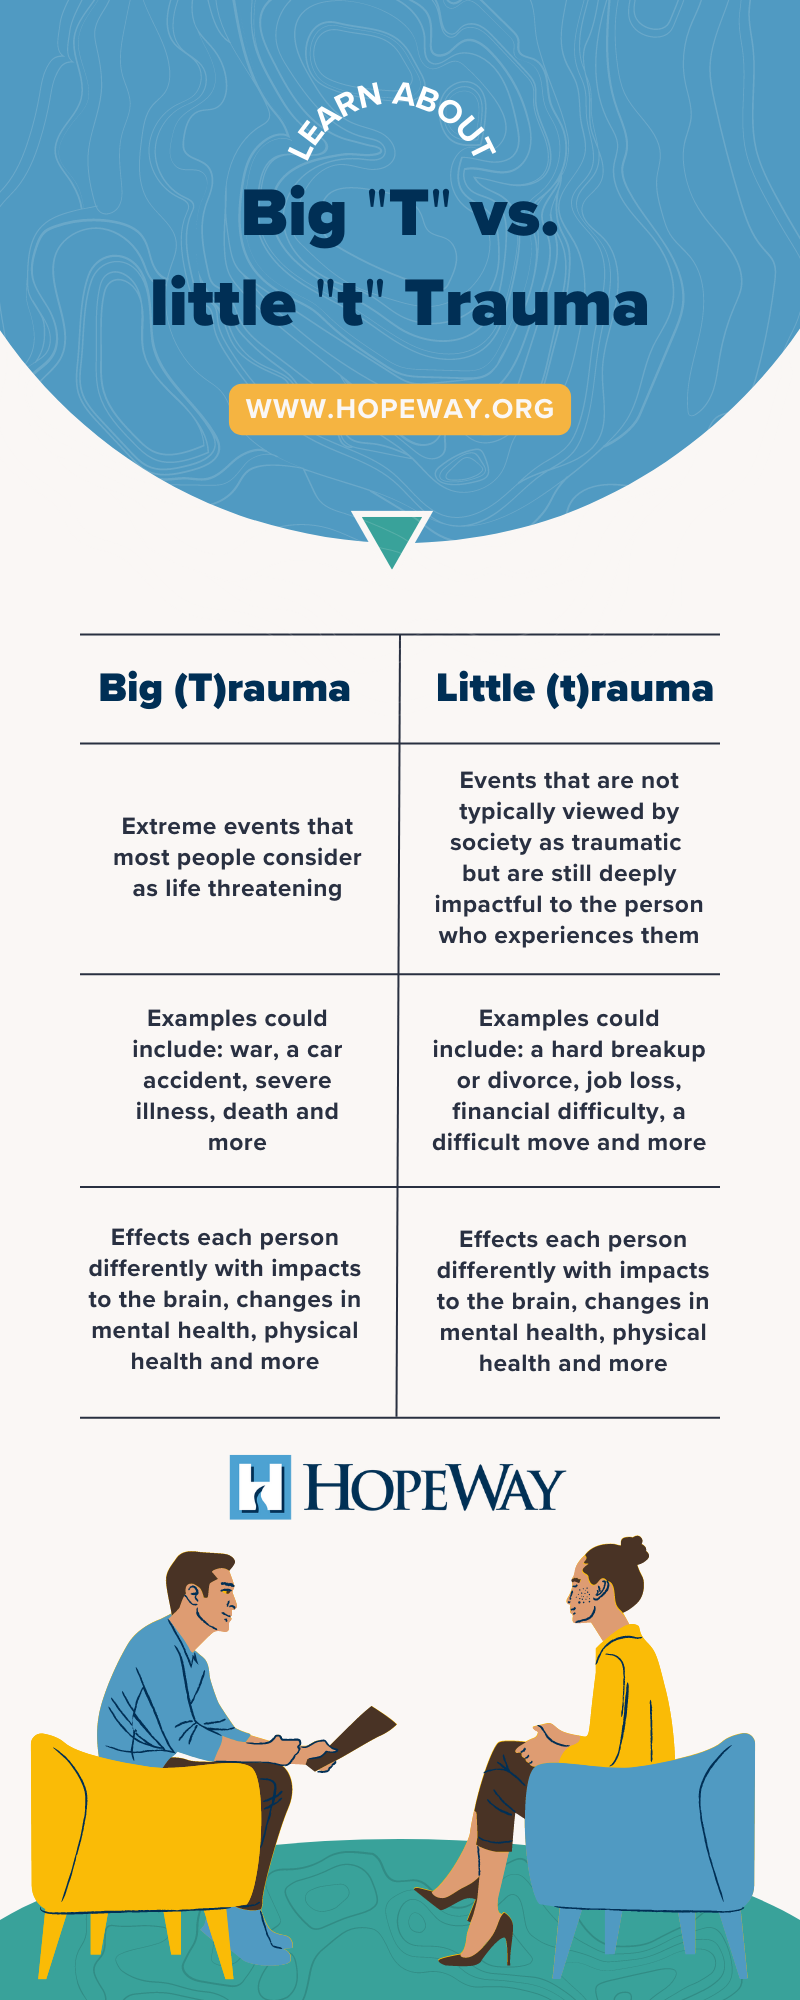 big t trauma and little t trauma and examples of big t trauma